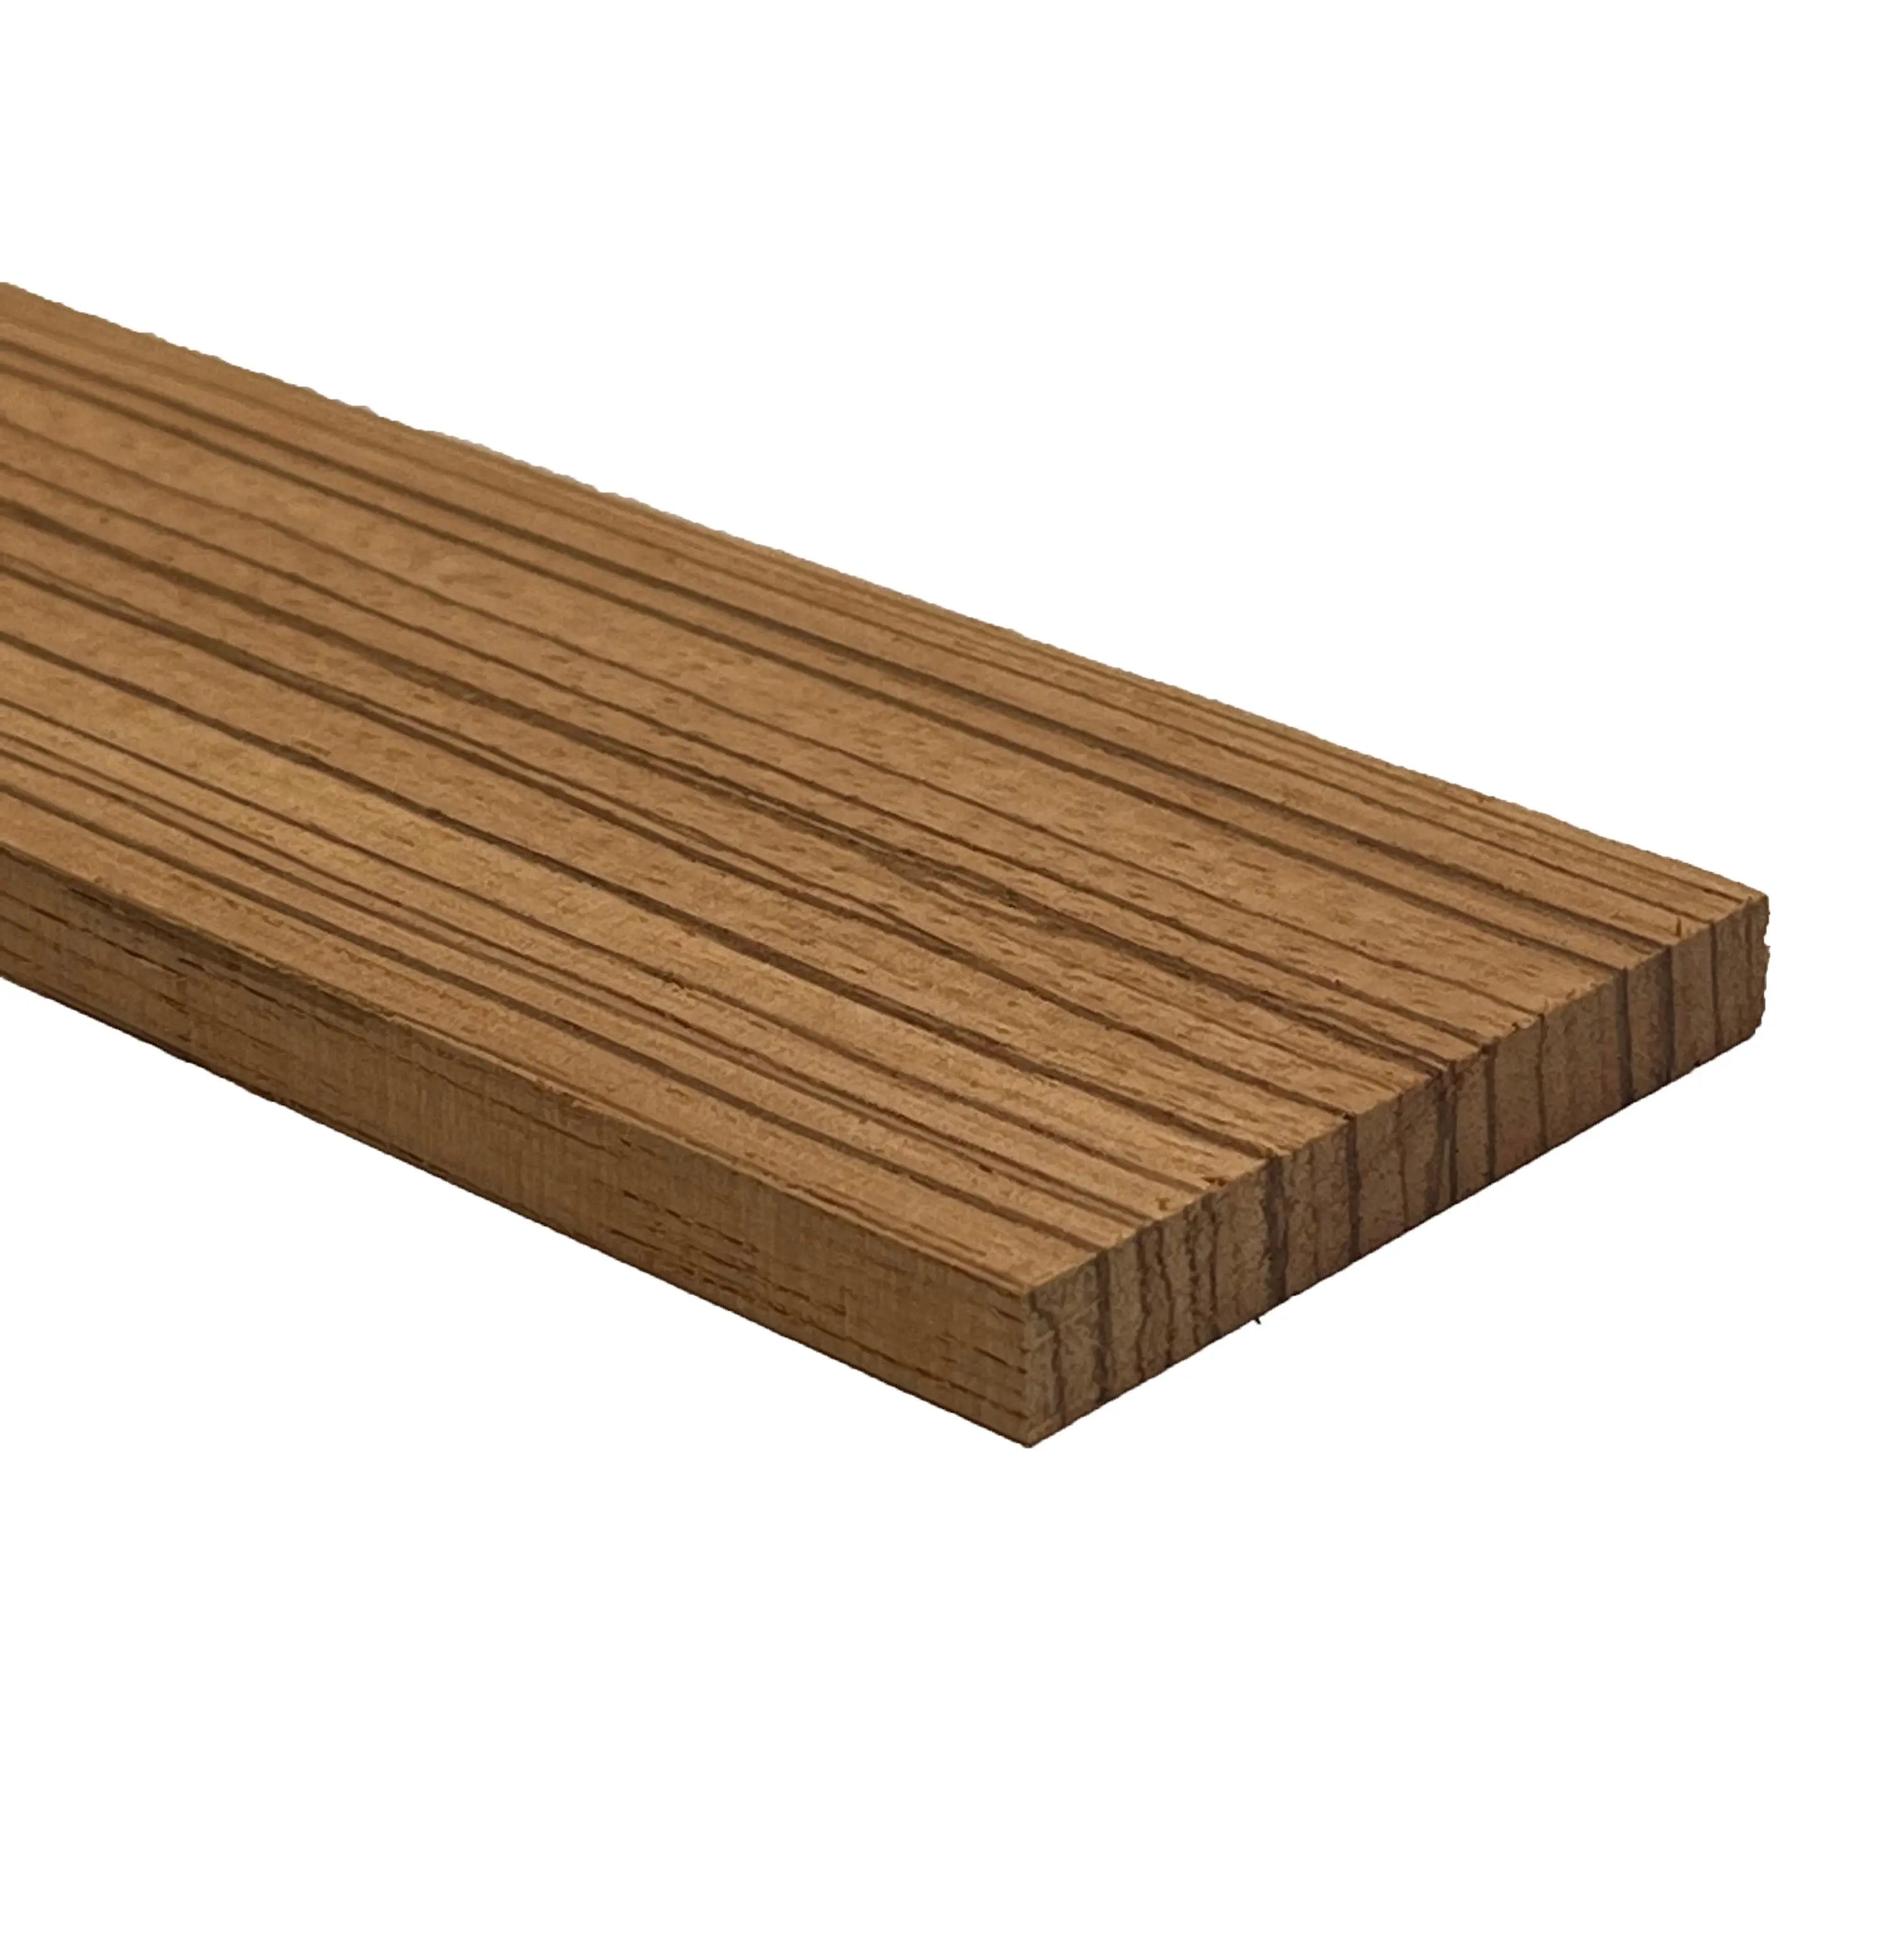 Zebrawood Thin Stock Lumber Boards Wood Crafts 1 4 x 3 48 at MechanicSurplus.com EWZ2609S